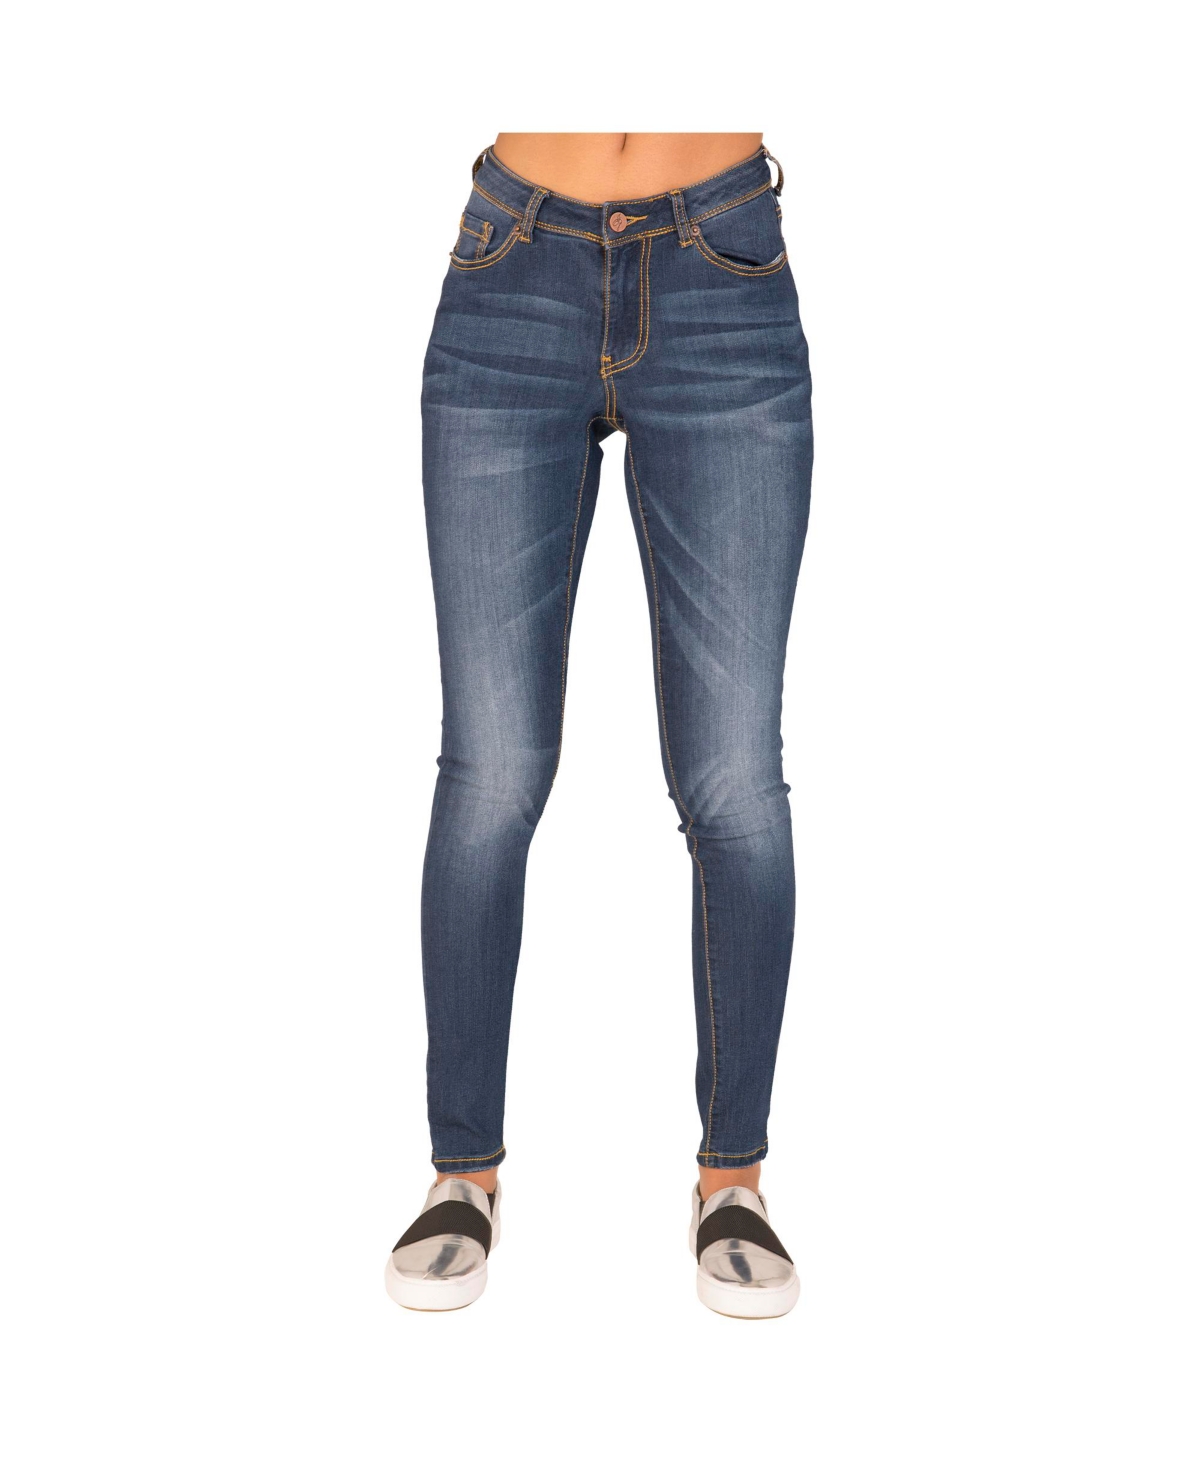 Women's Extra Curvy Fit Medium Vintage like Stretch Denim Skinny Jeans - Medium blue